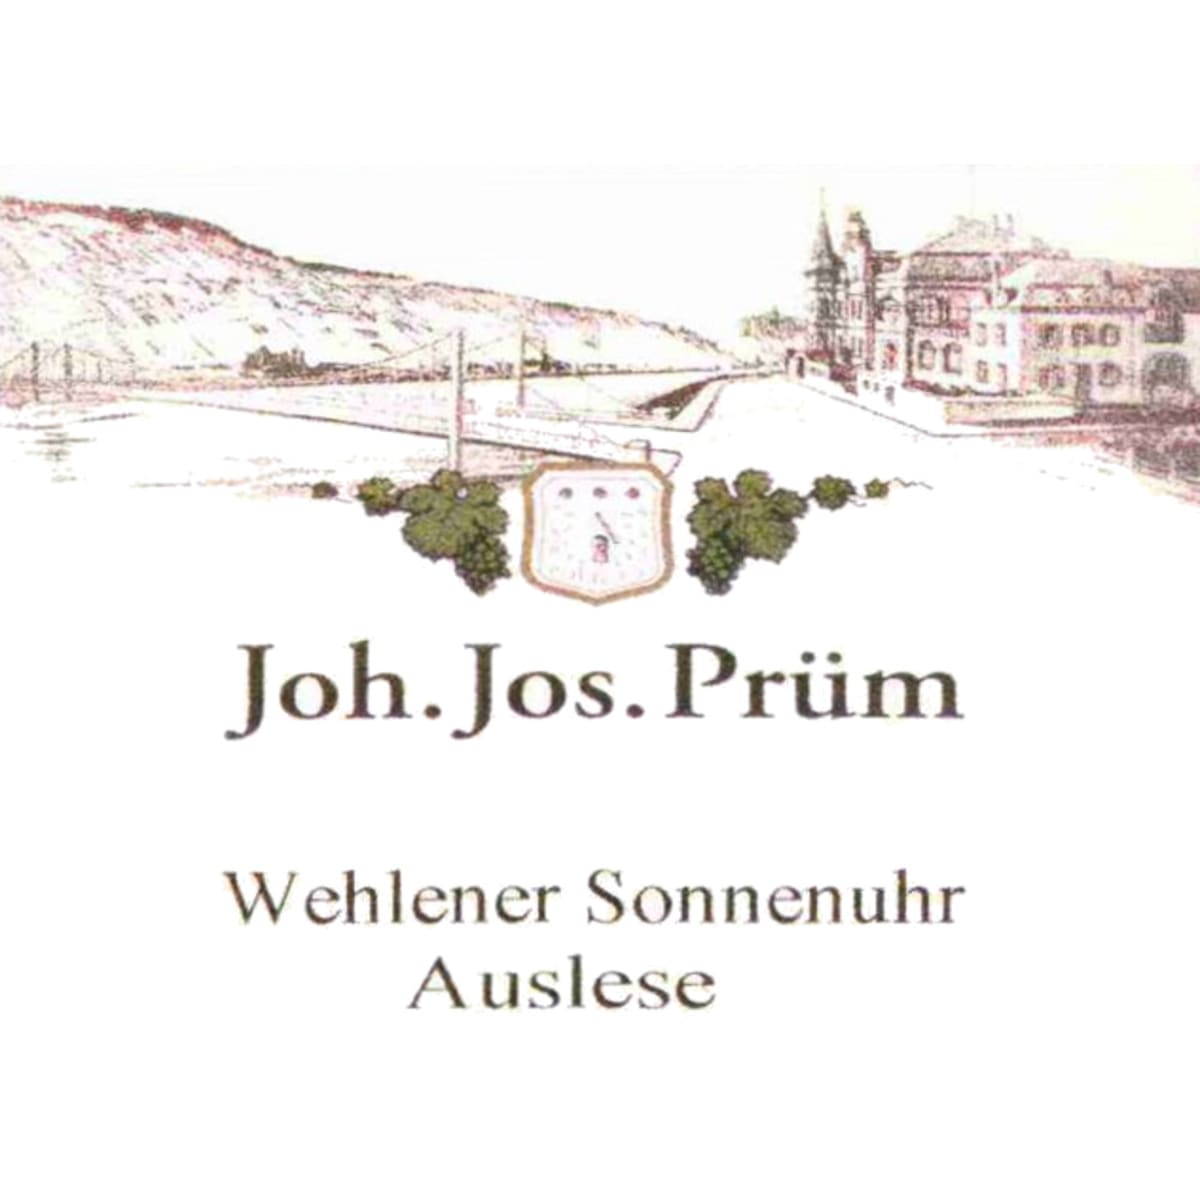 J.J. Prum Wehlener Sonnenuhr Riesling Auslese 2011 Front Label